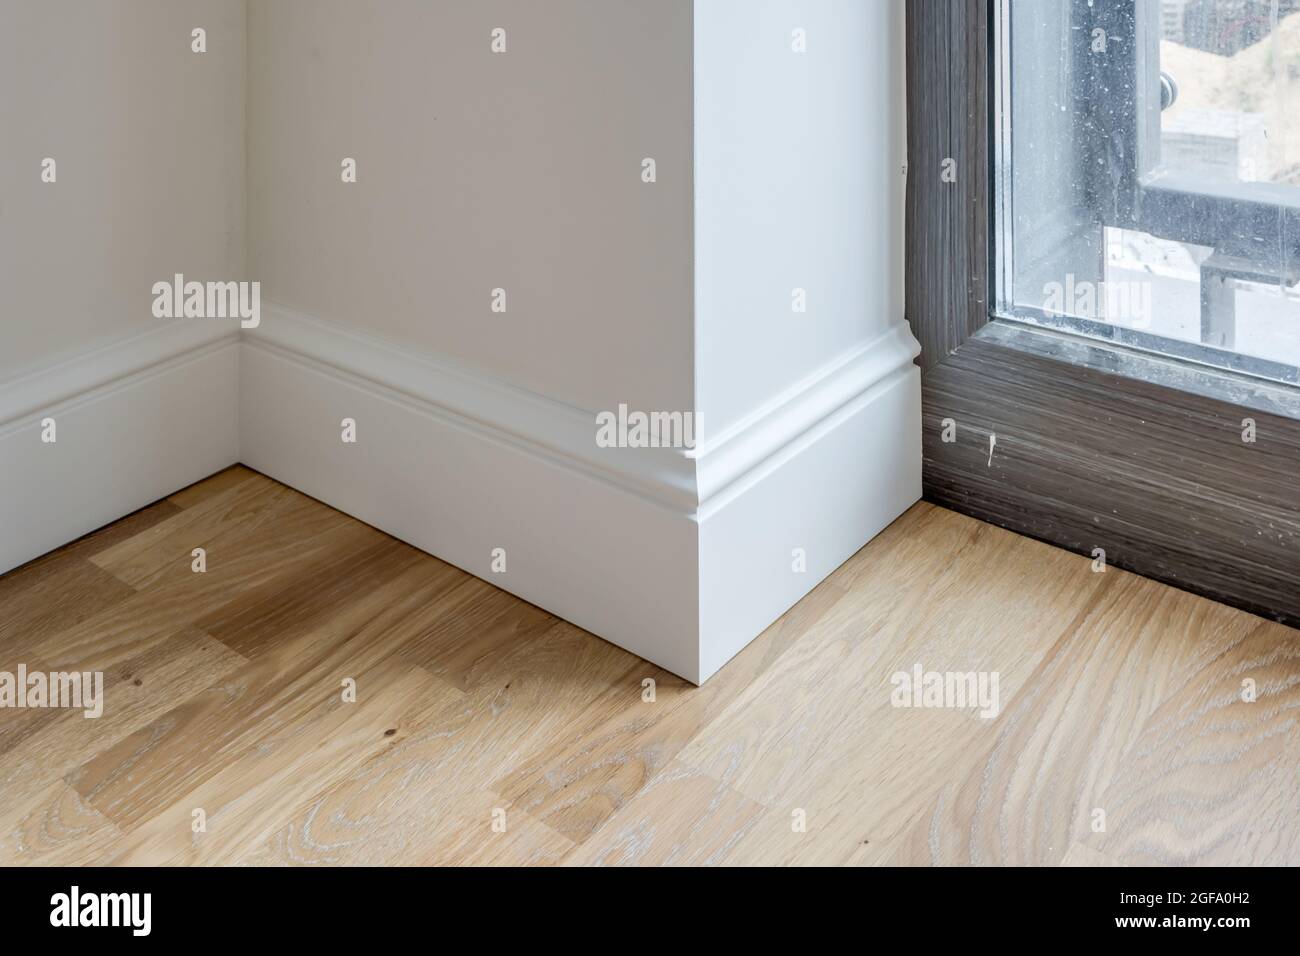 5 ways skirting boards can enhance interior design - Design for Me